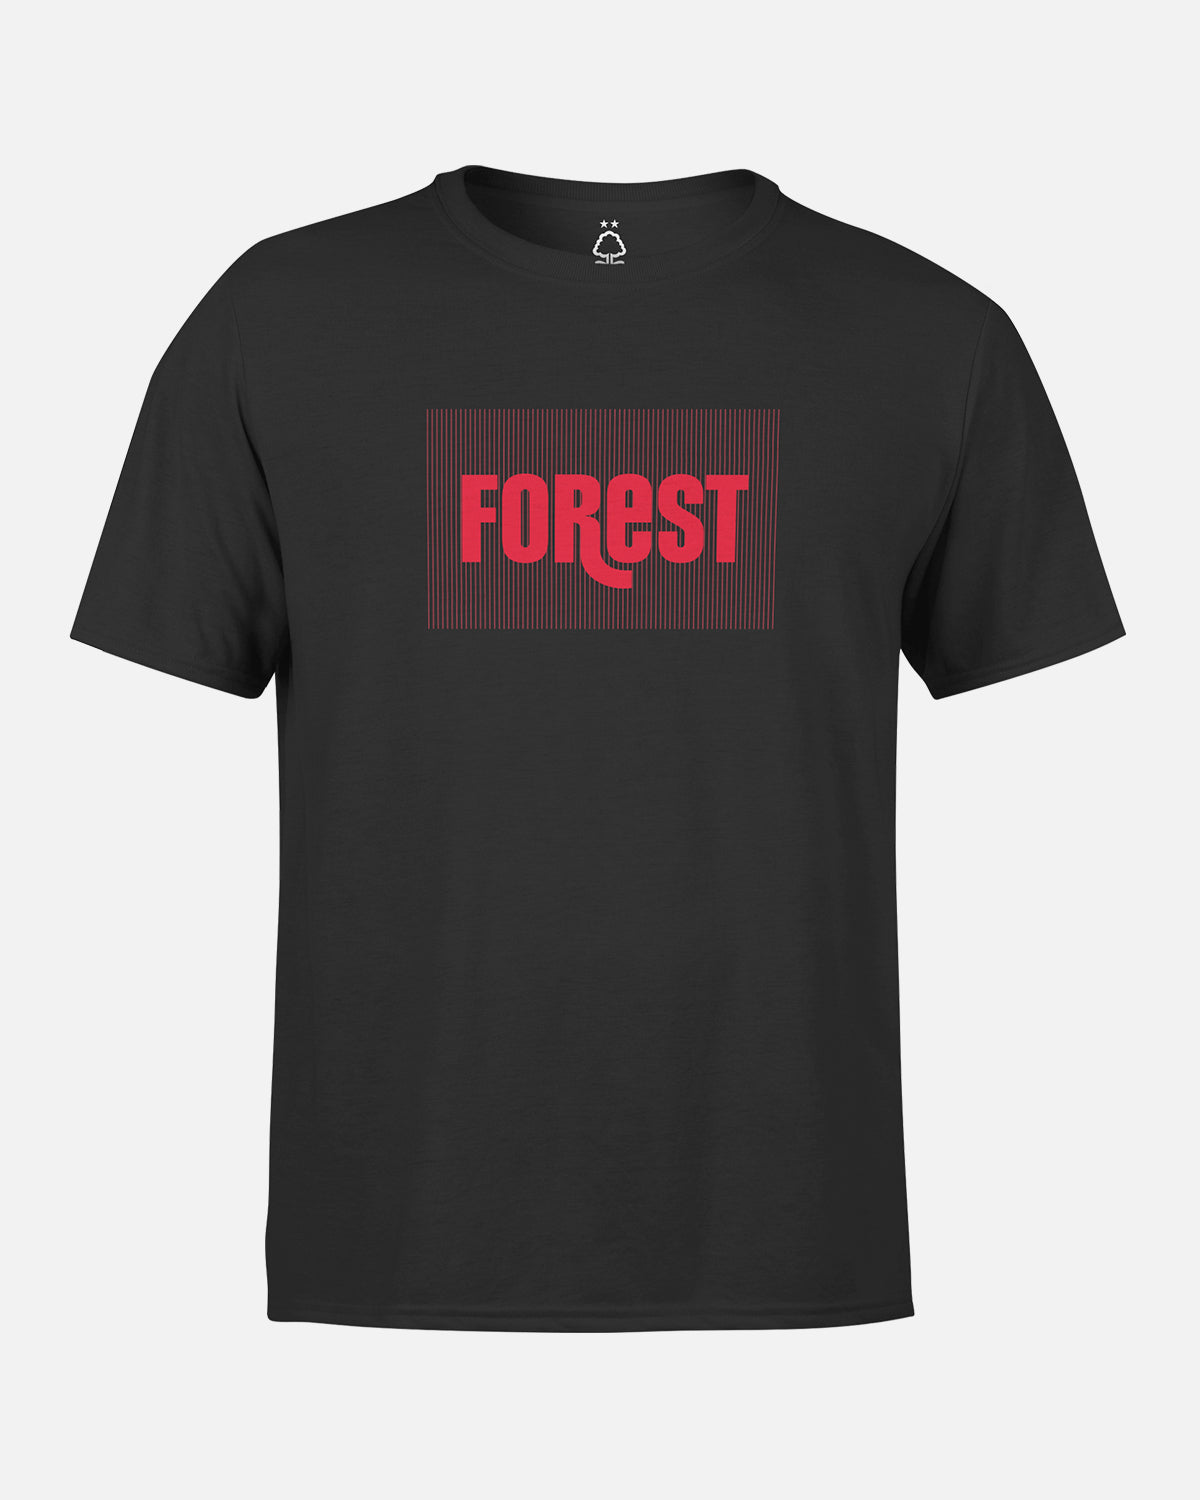 NFFC Junior Black Forest Block T-Shirt